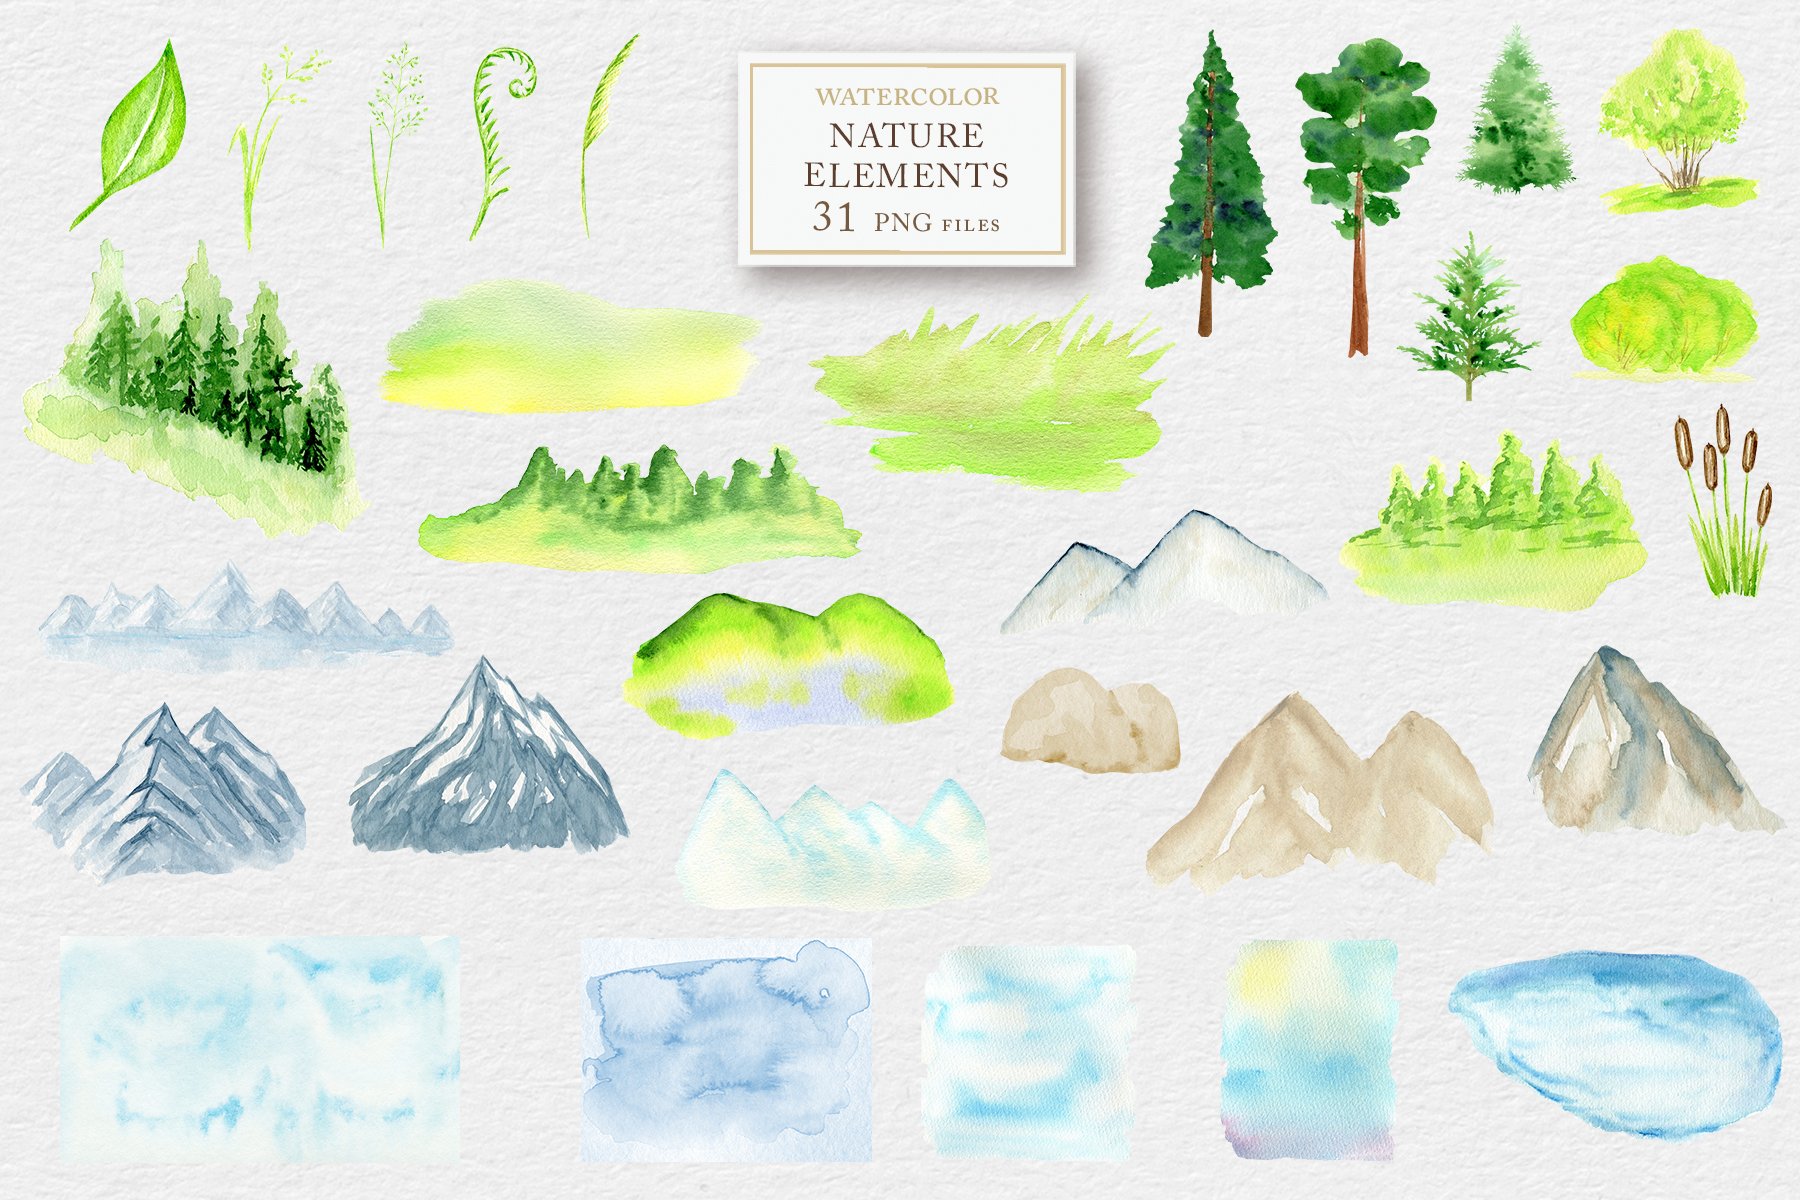 Diversity of watercolor nature elements.